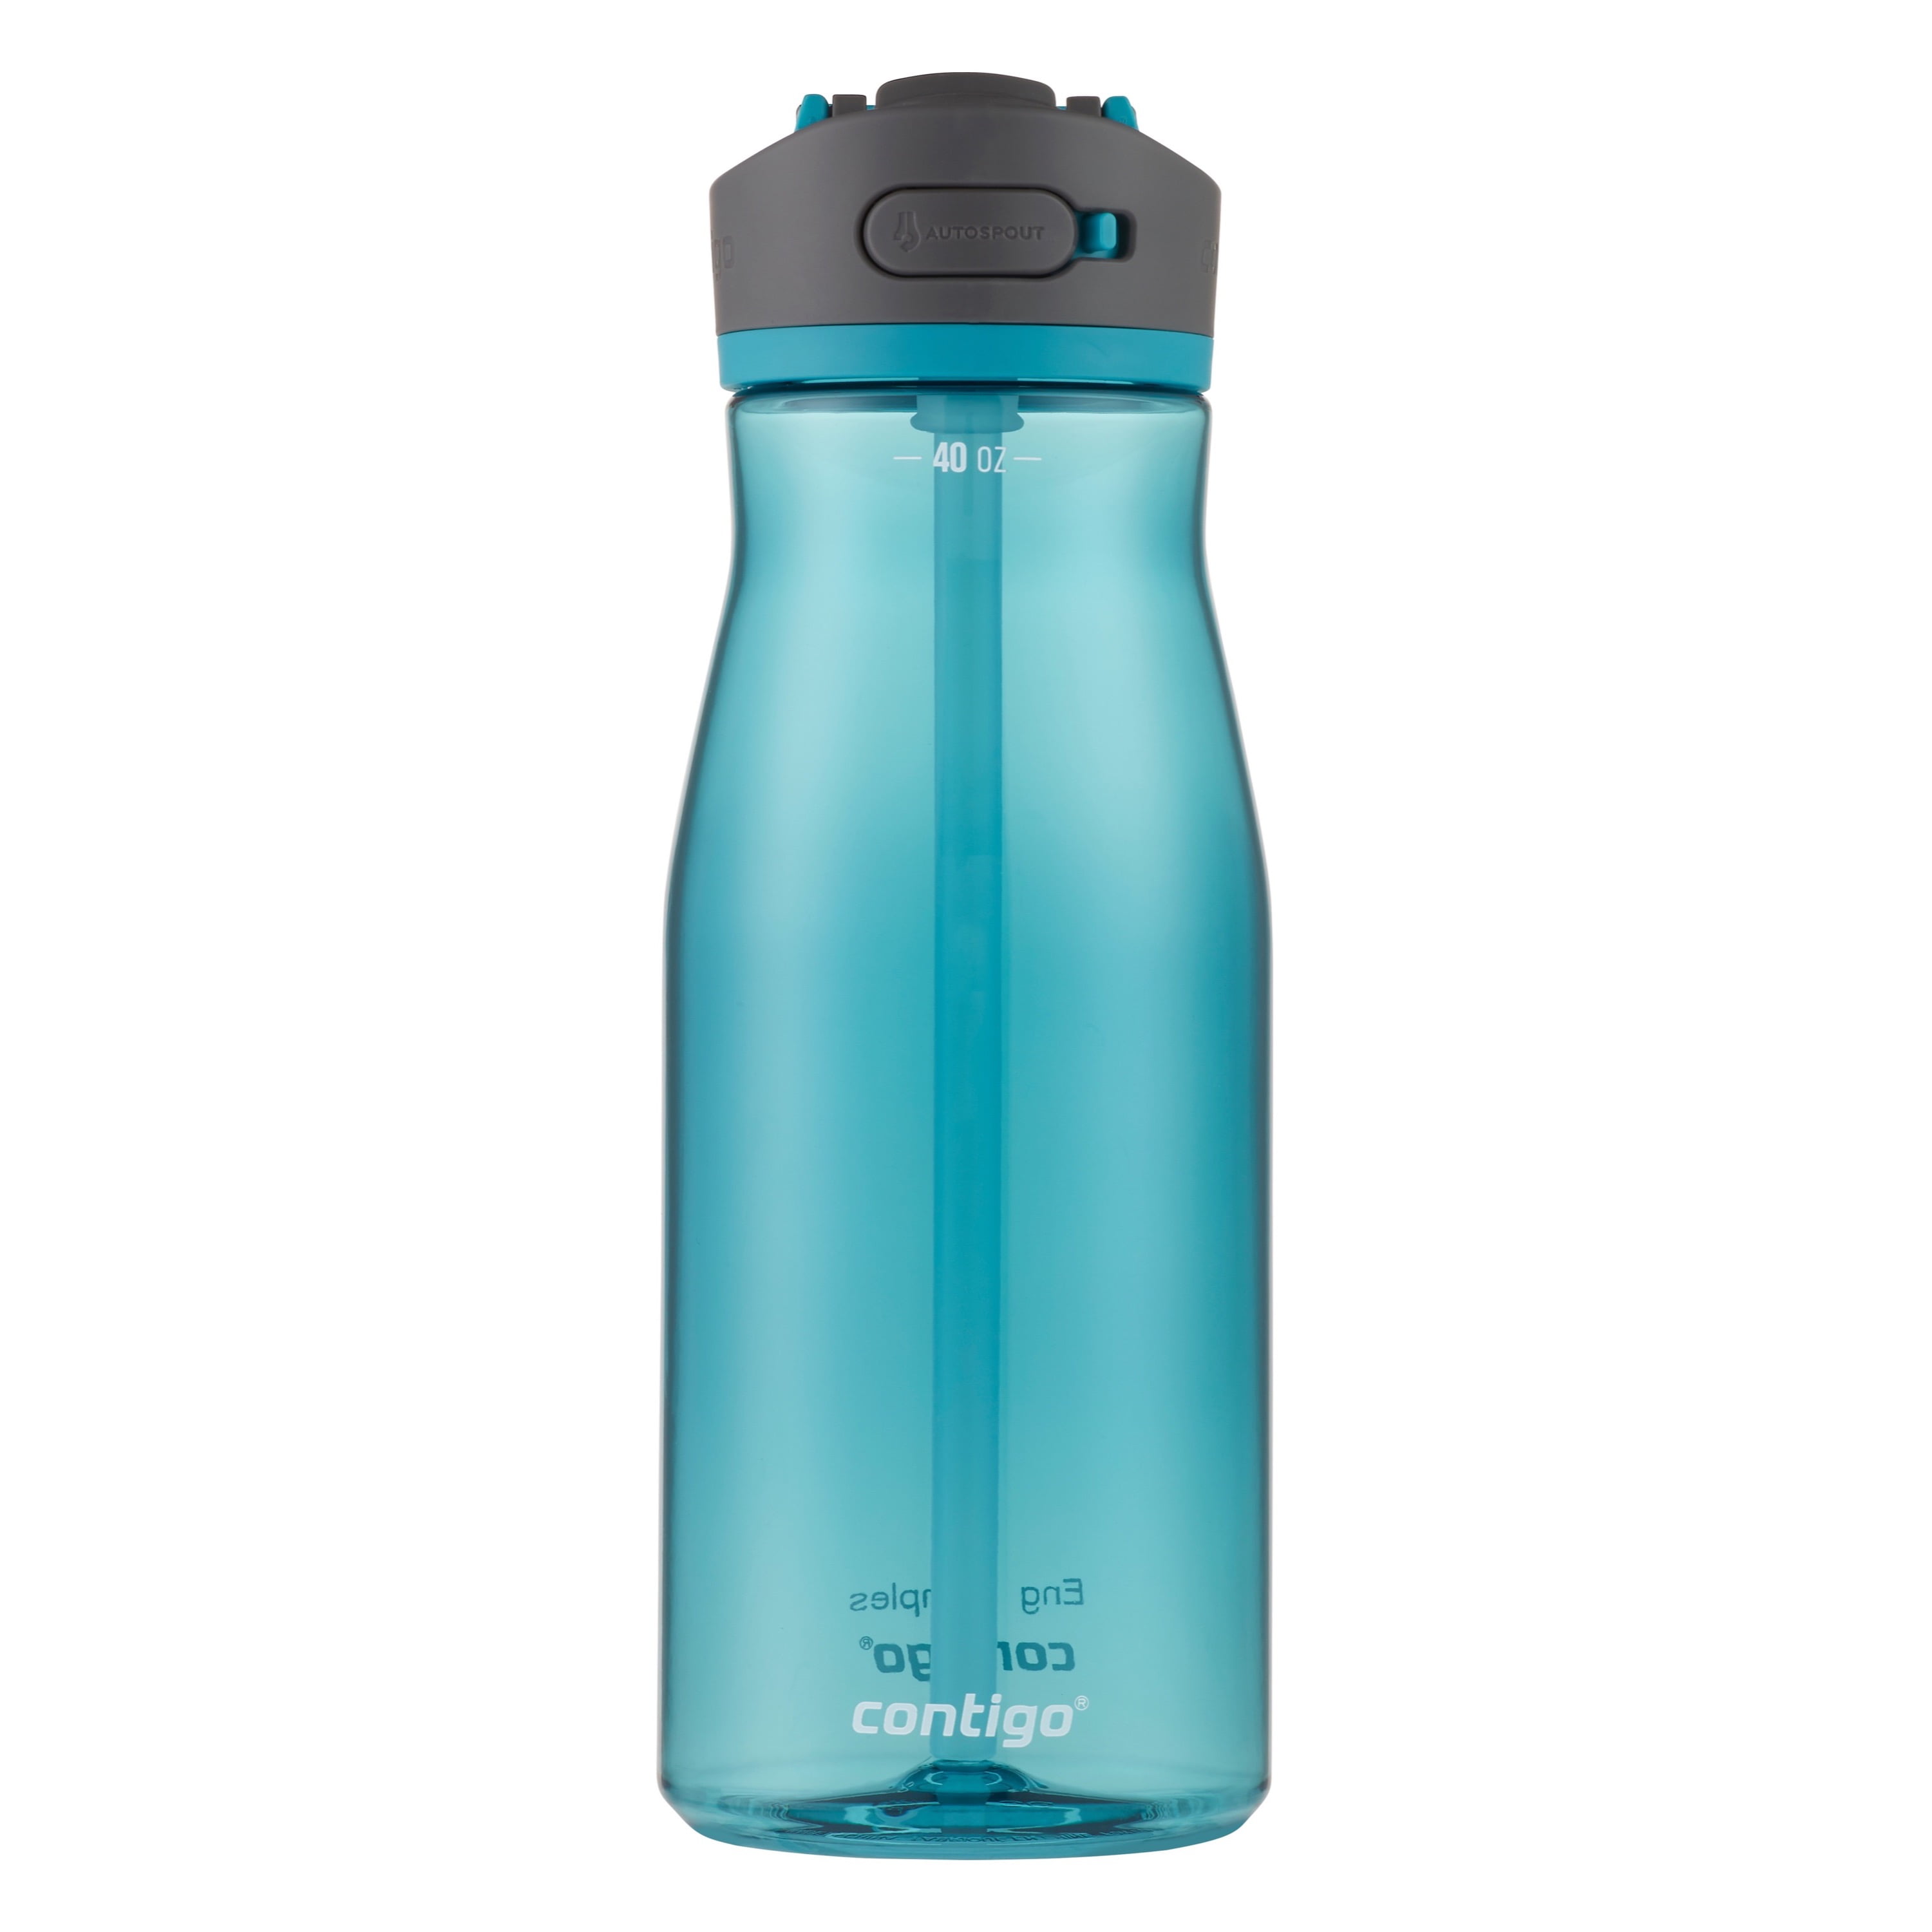 Contigo 40 oz Ashland 2.0 Tritan Water Bottle with AutoSpout Lid